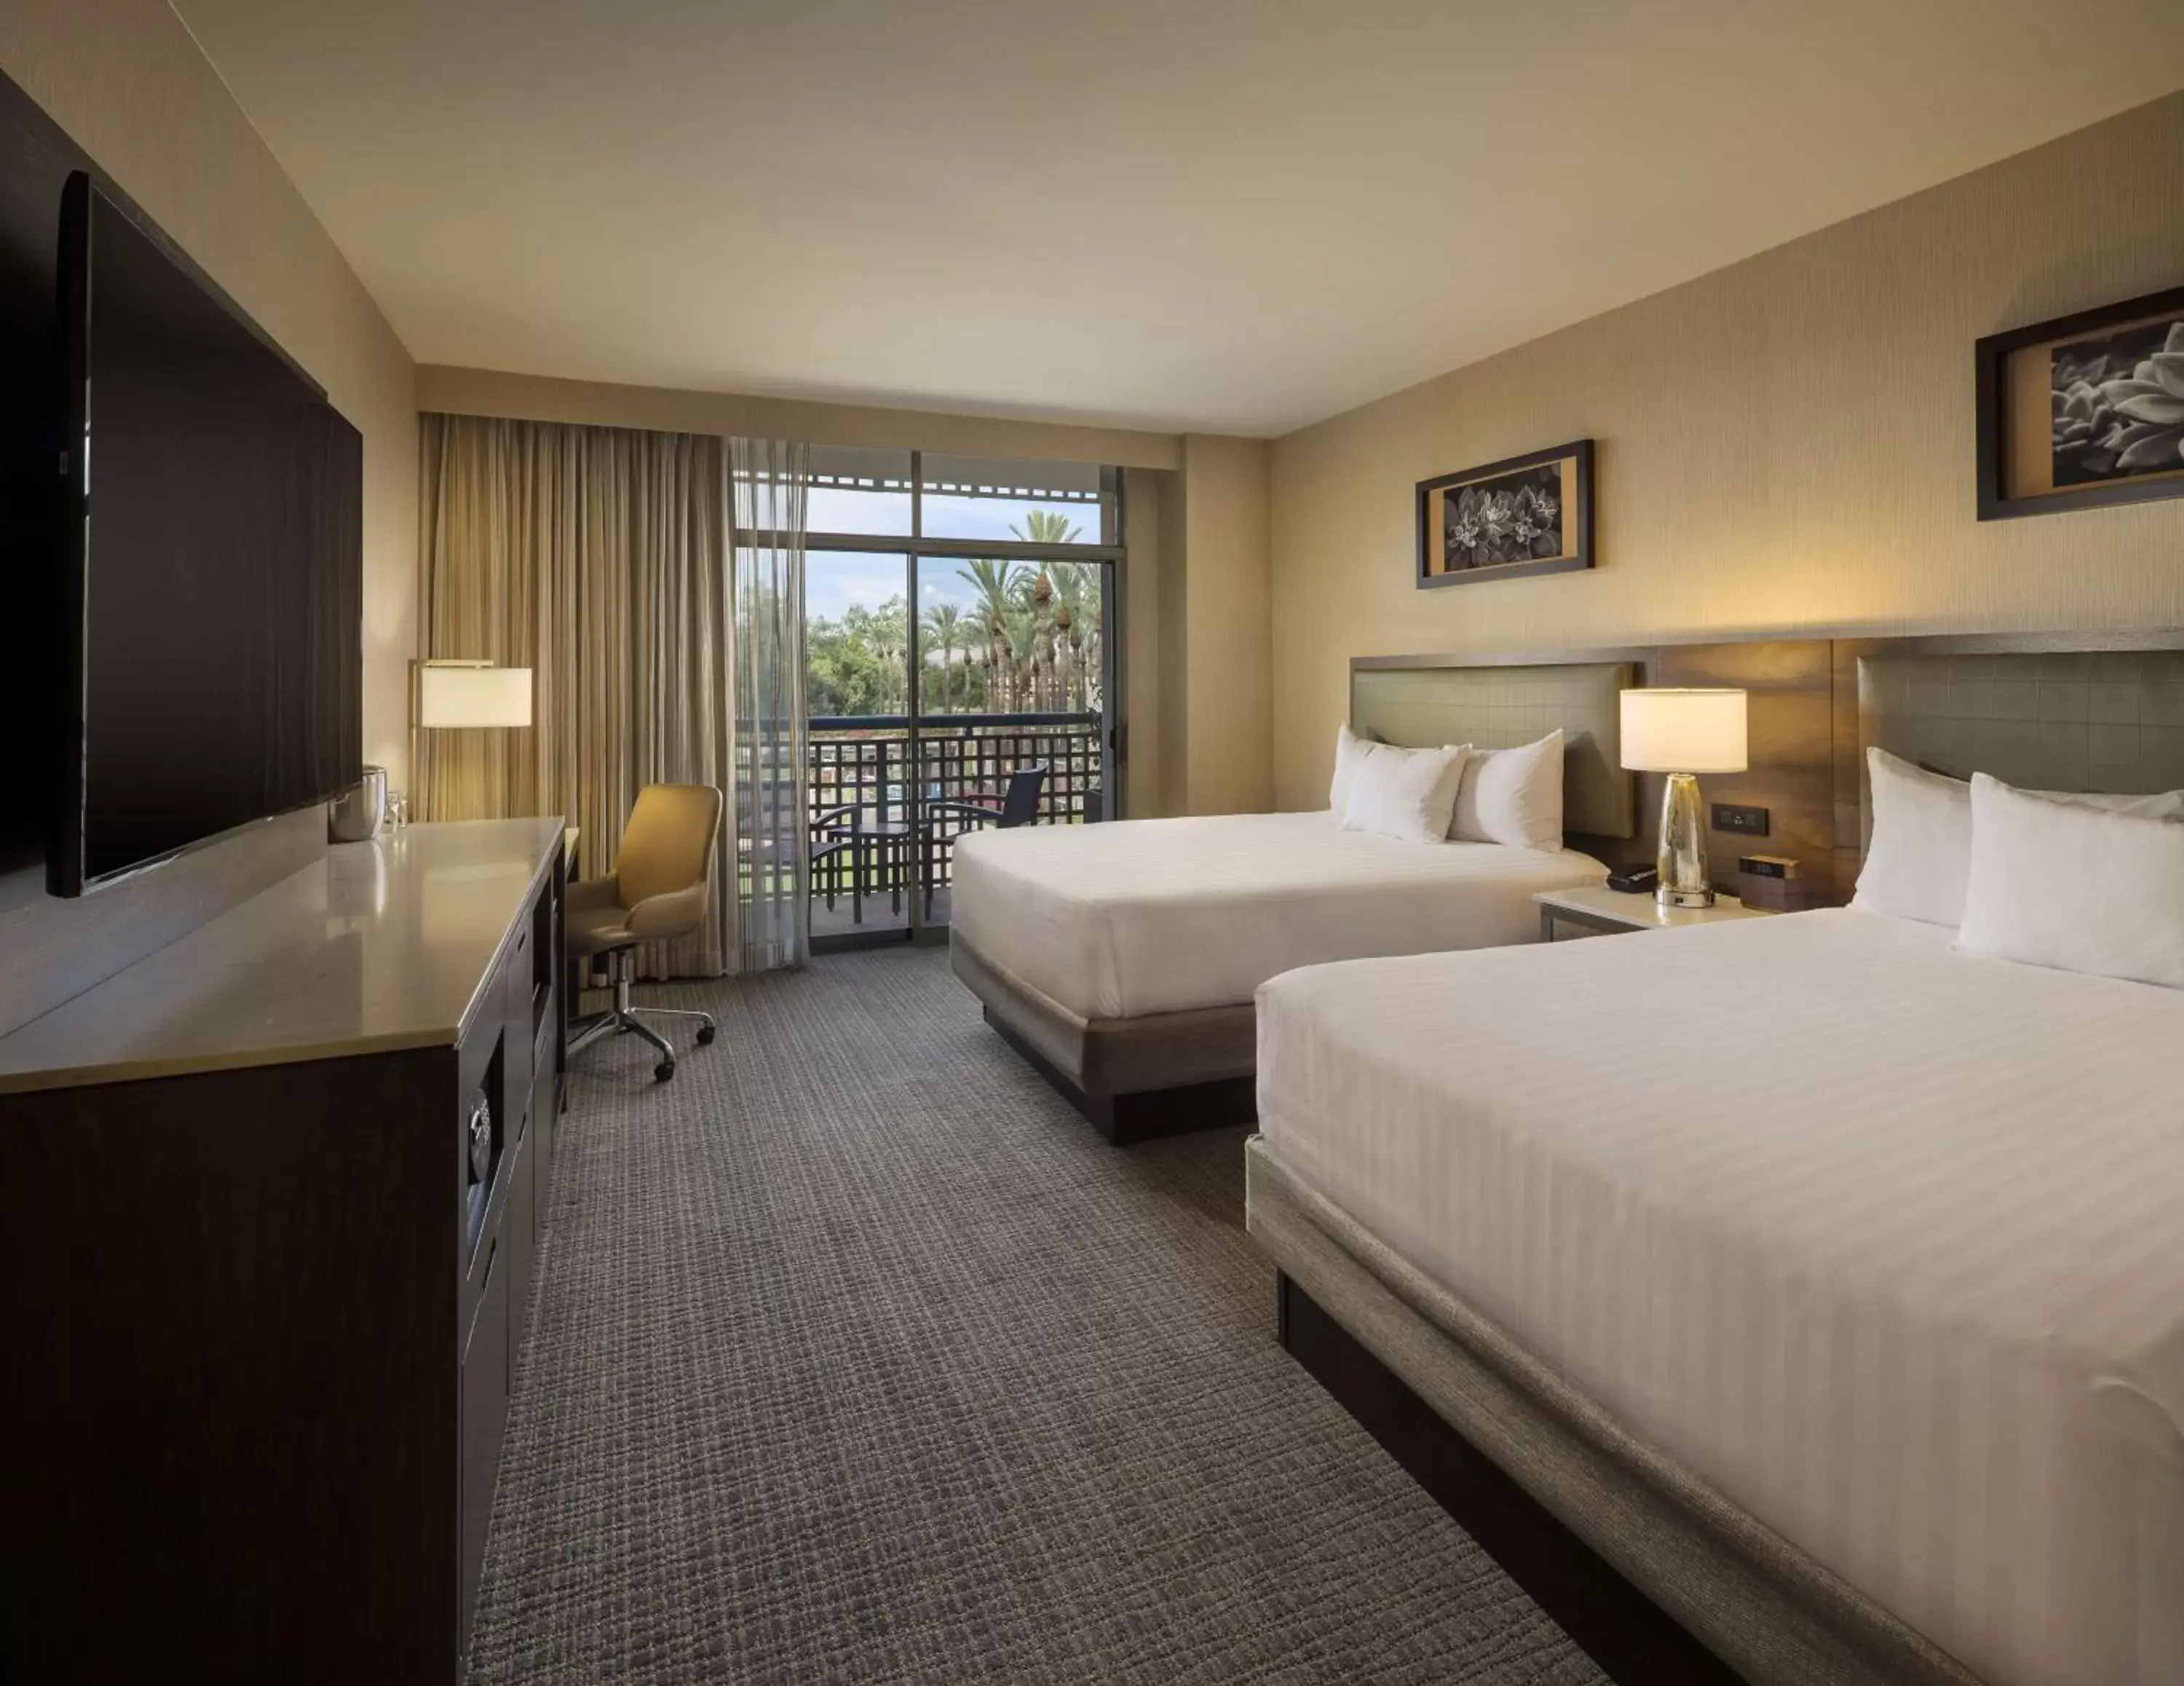 Bedroom in Hyatt Regency Scottsdale Resort and Spa